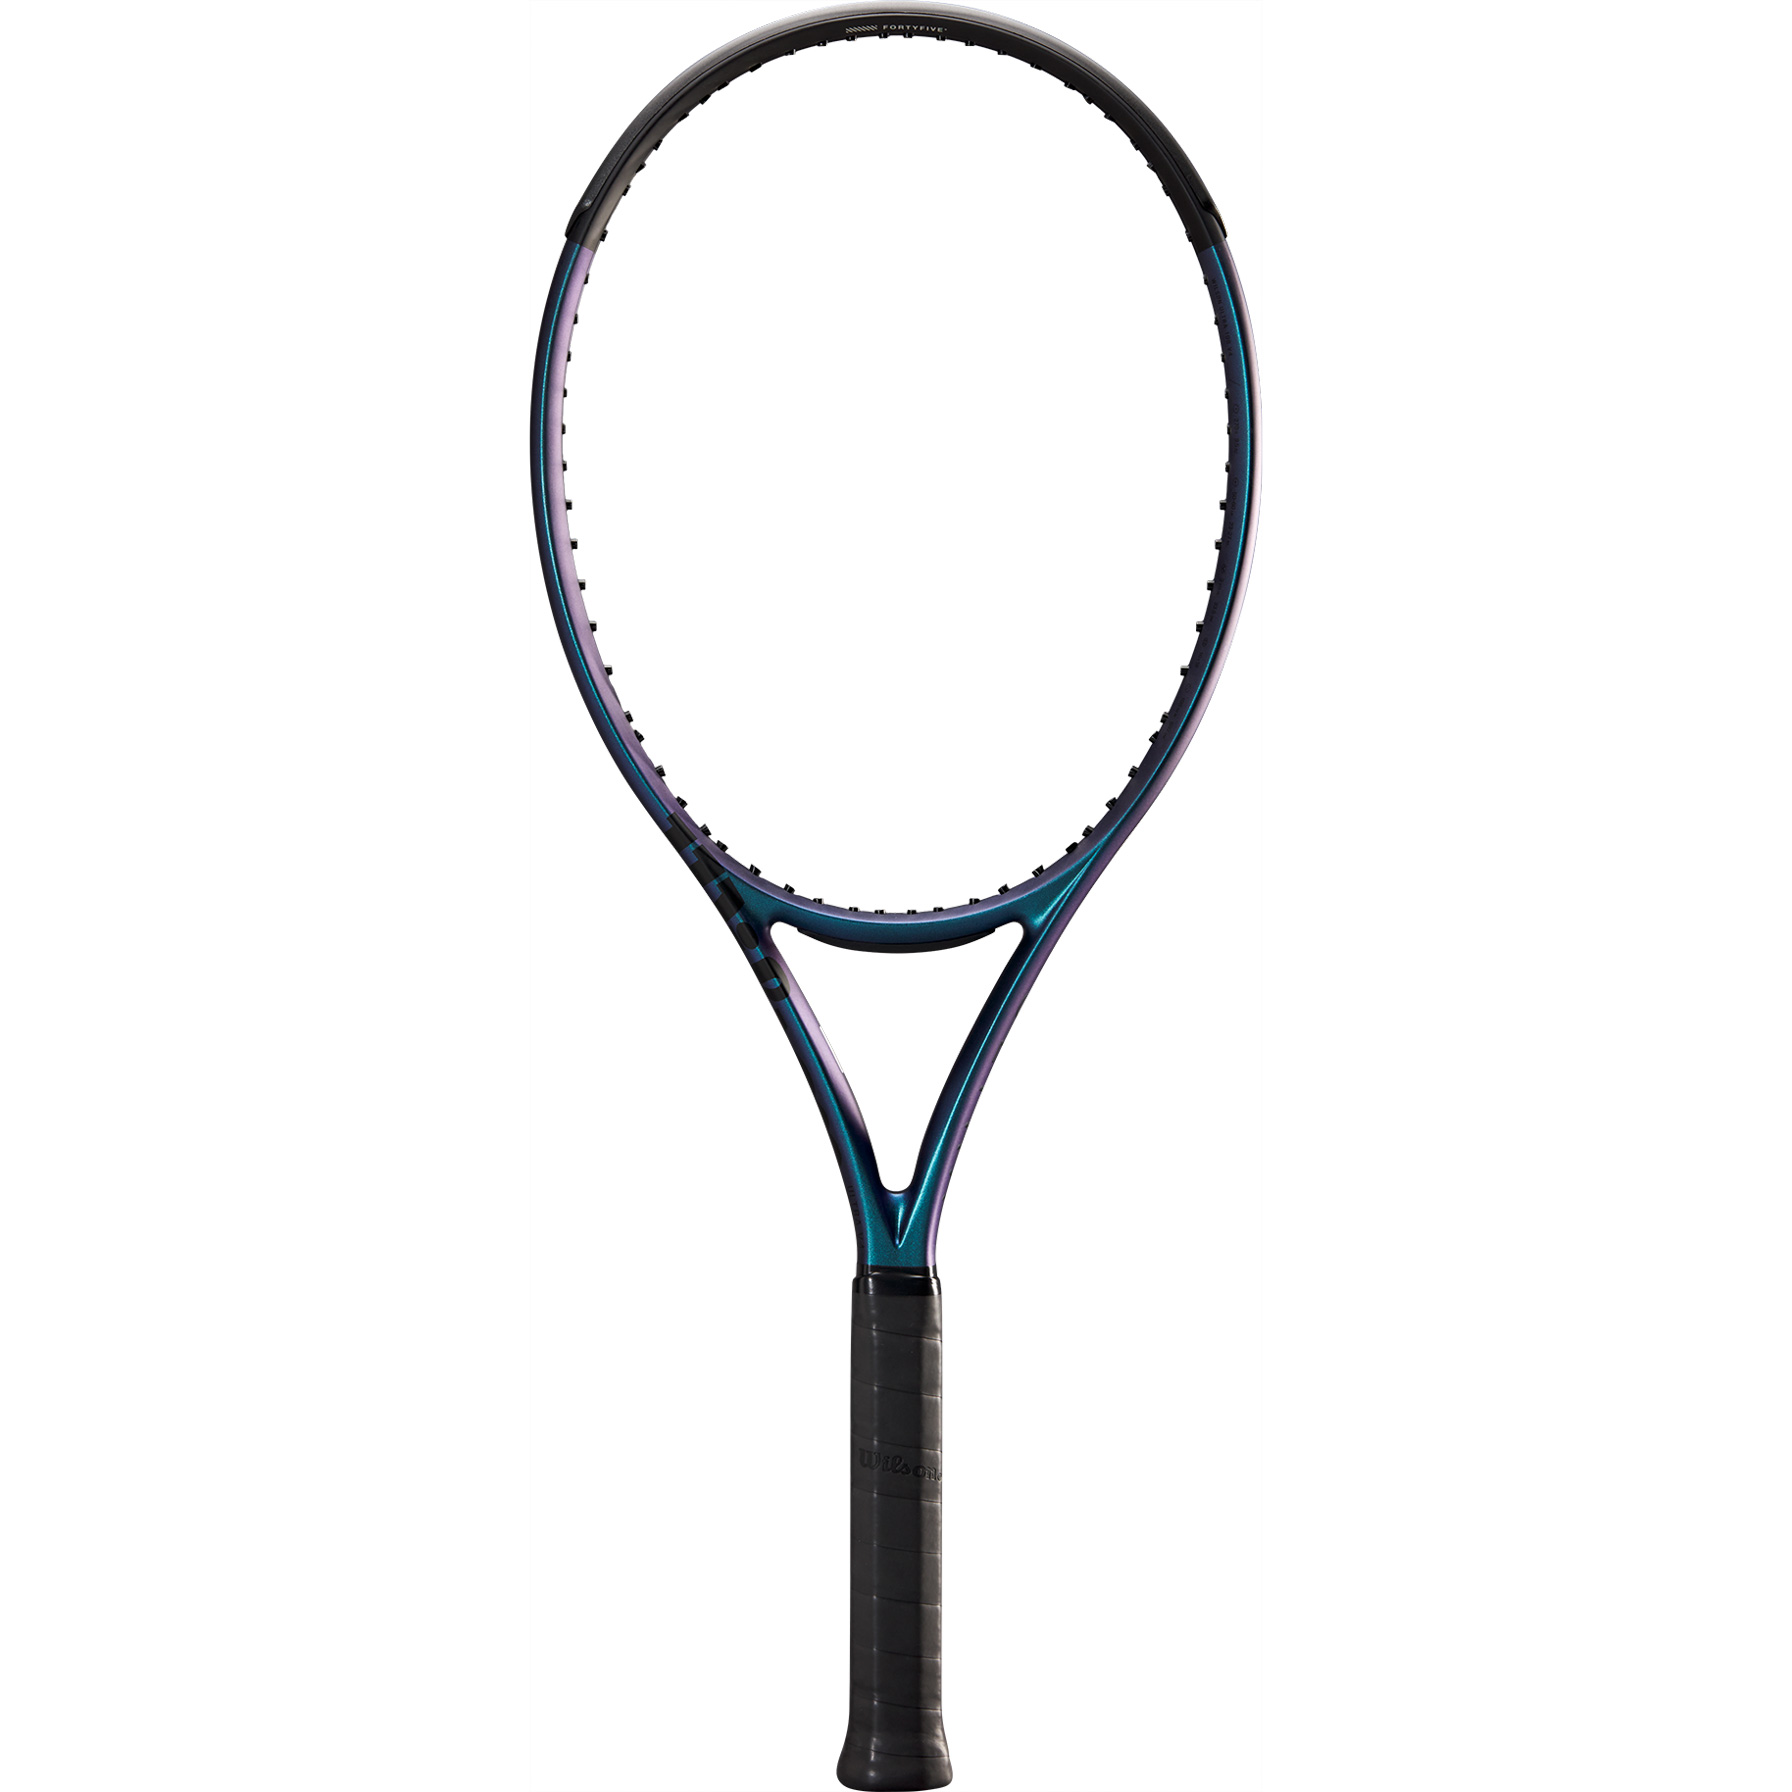 Ultra 108 v4 Tennisschläger unbesaitet 2022 (270gr.)